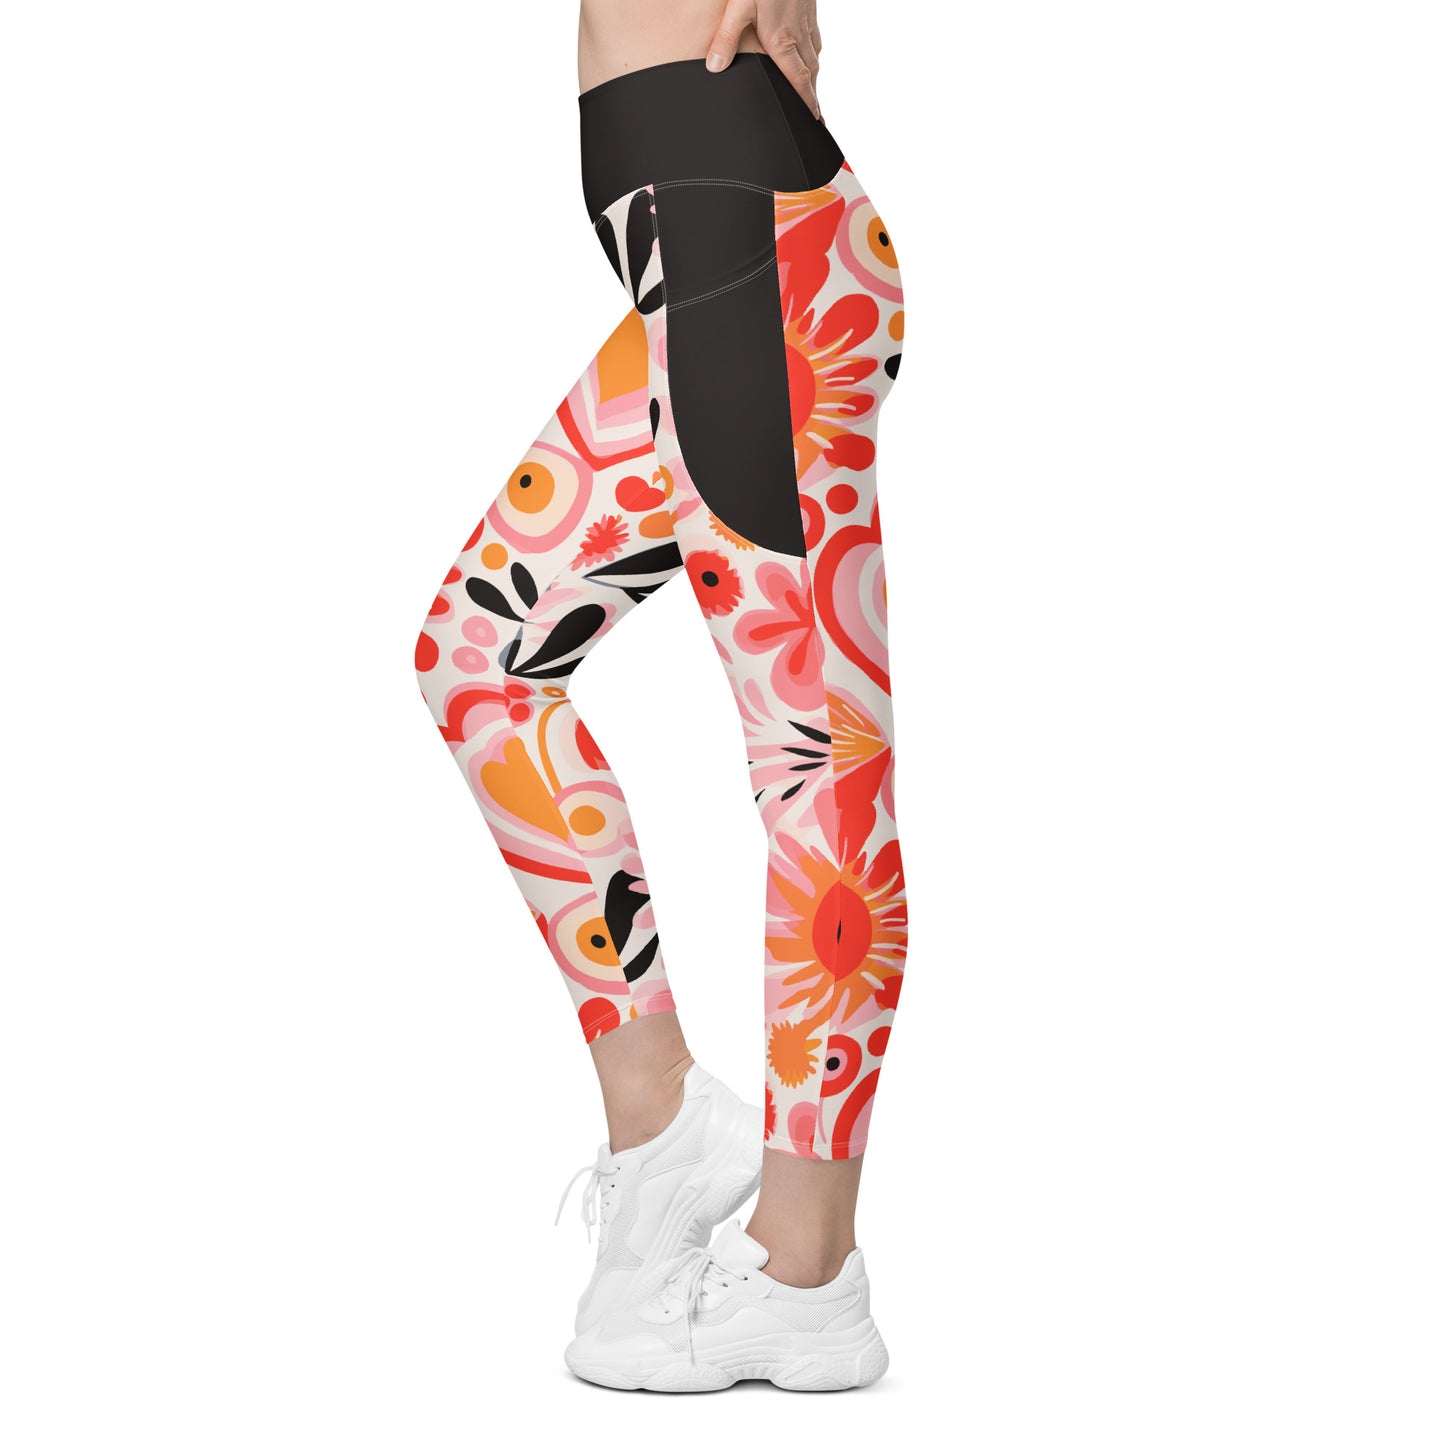 Amatxoa High Waist 7/8 Recycled Yoga Leggings / Yoga Pants with Pockets